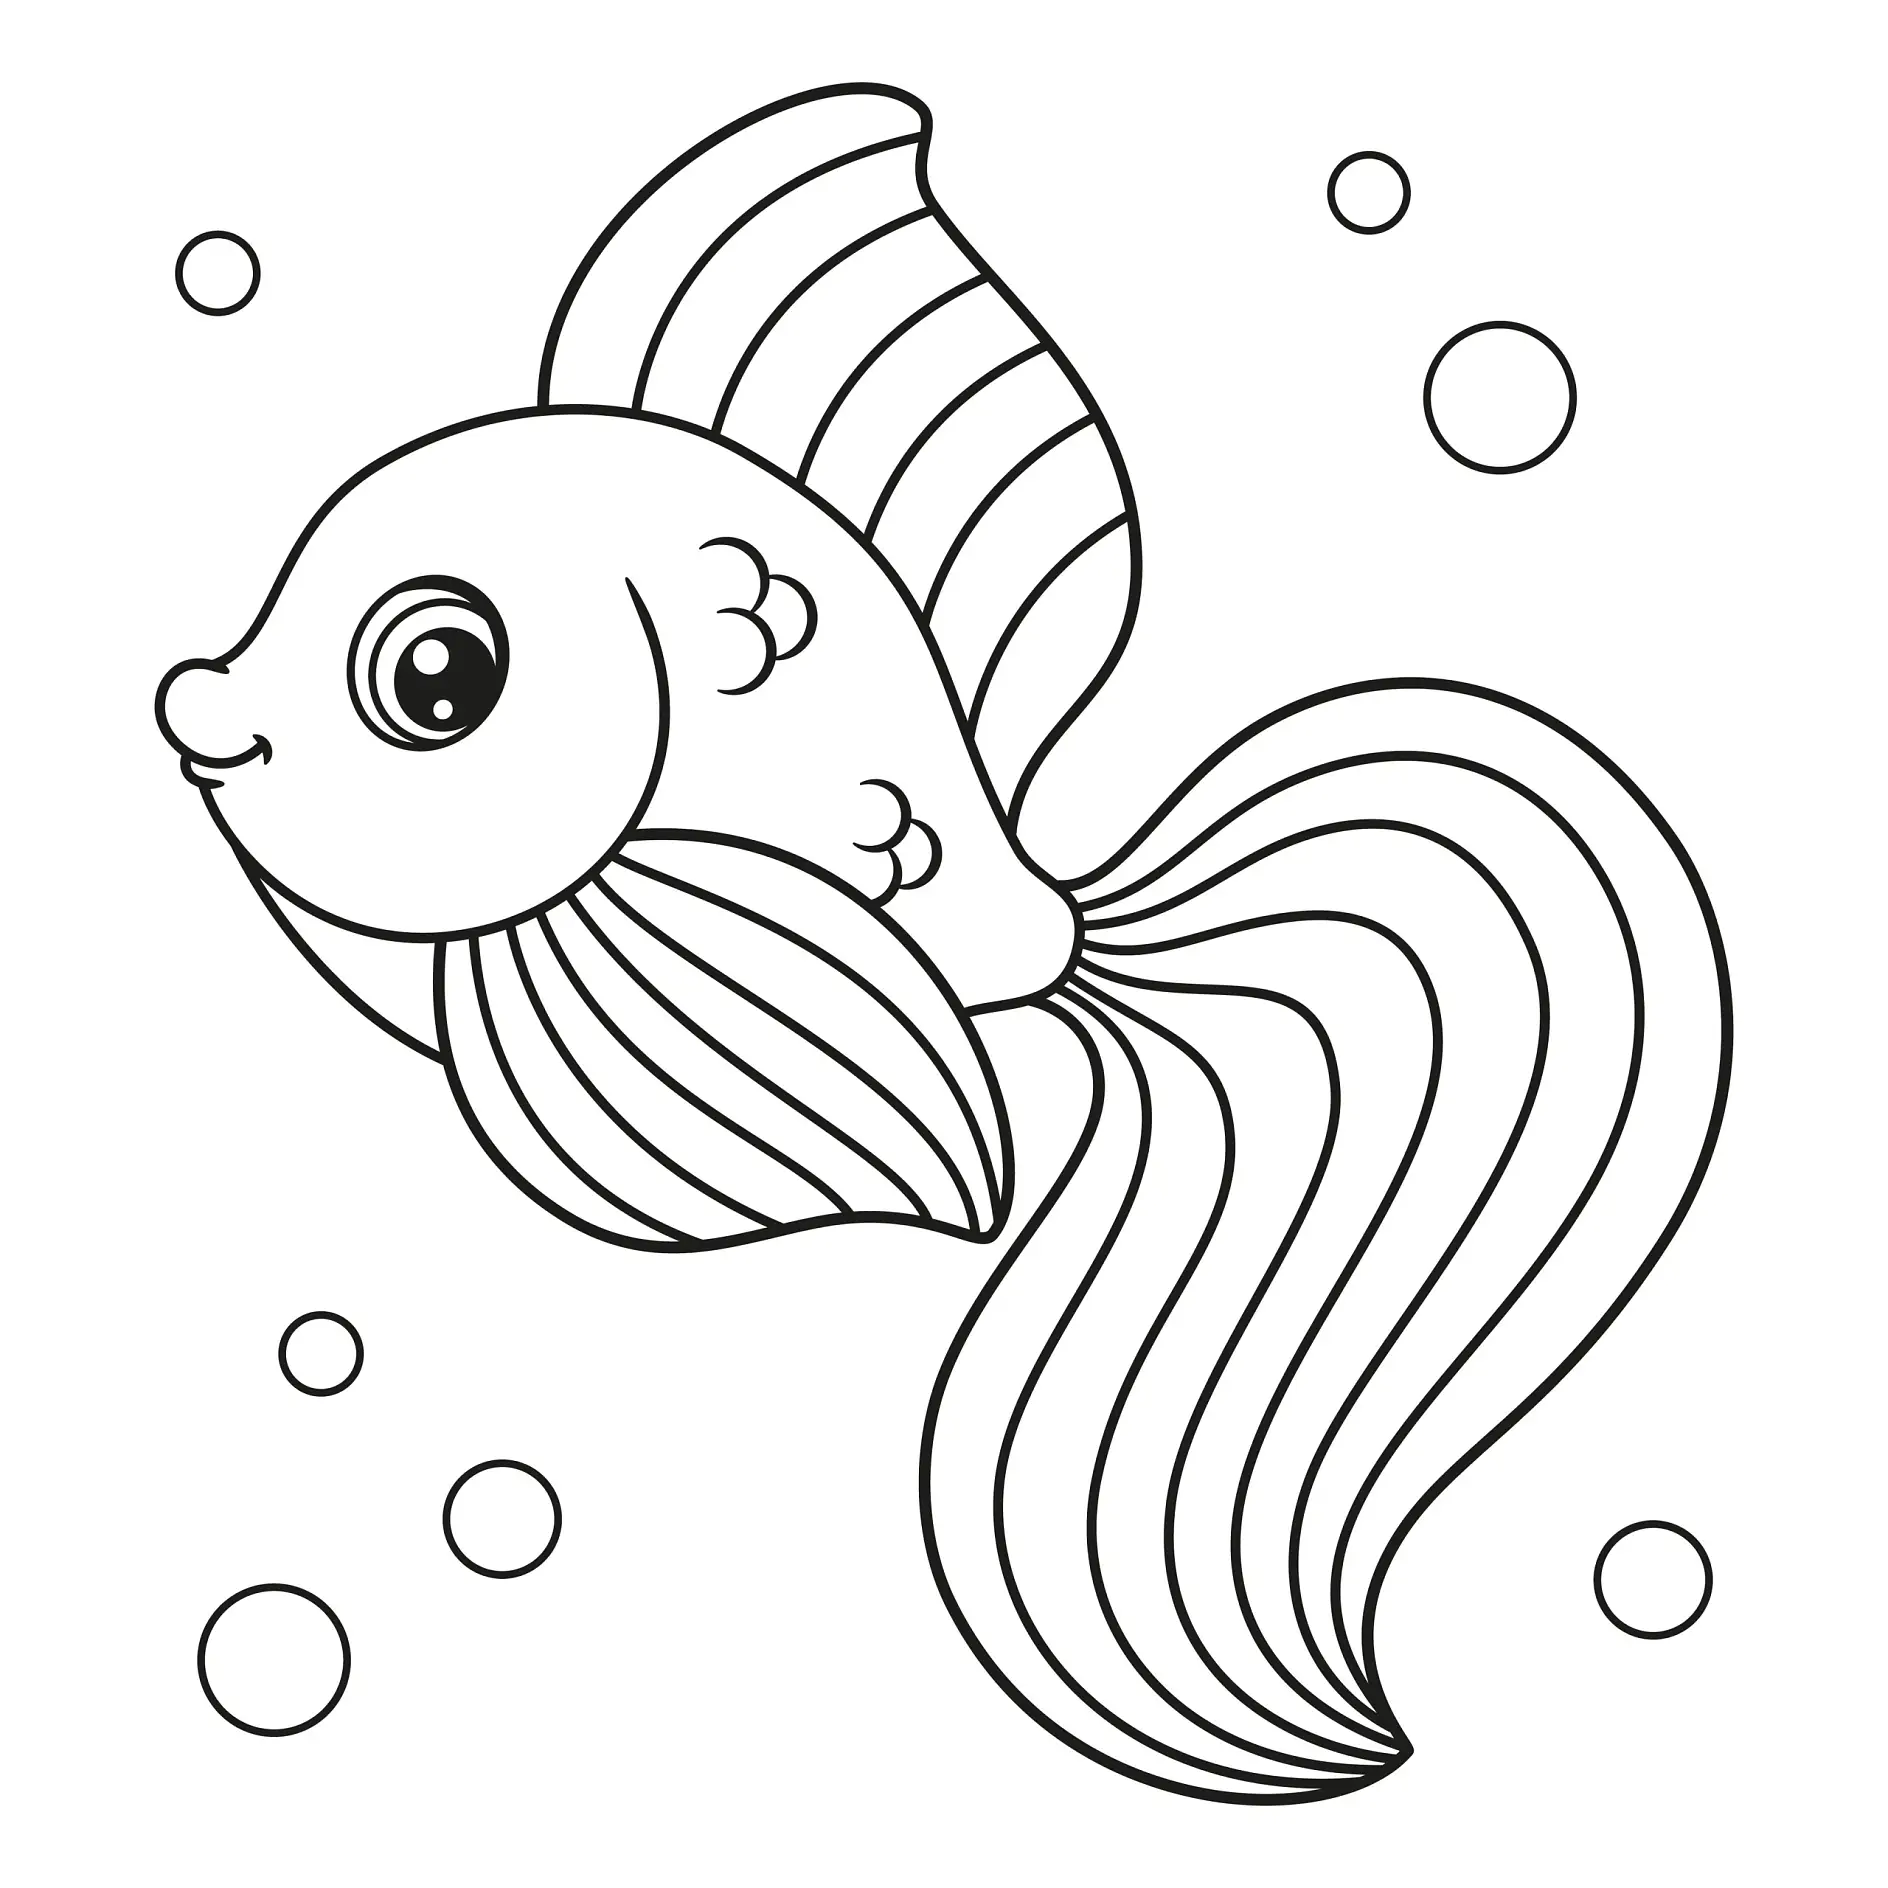 Cute cartoon fish coloring page, vector illustration